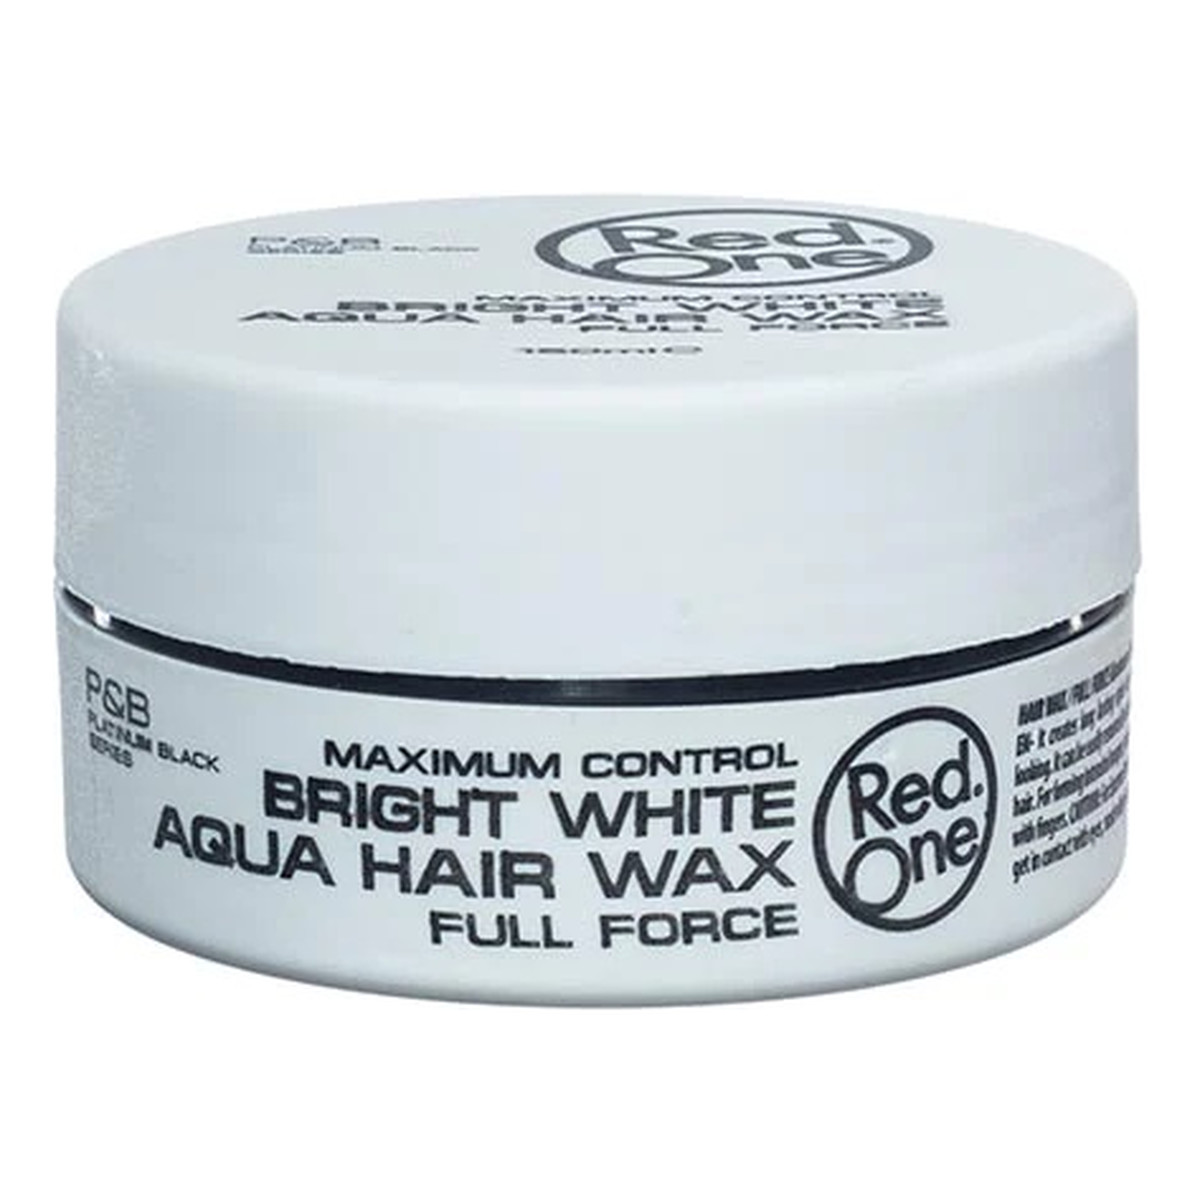 Red One Aqua hair gel wax full force wosk do włosów bright white 150ml